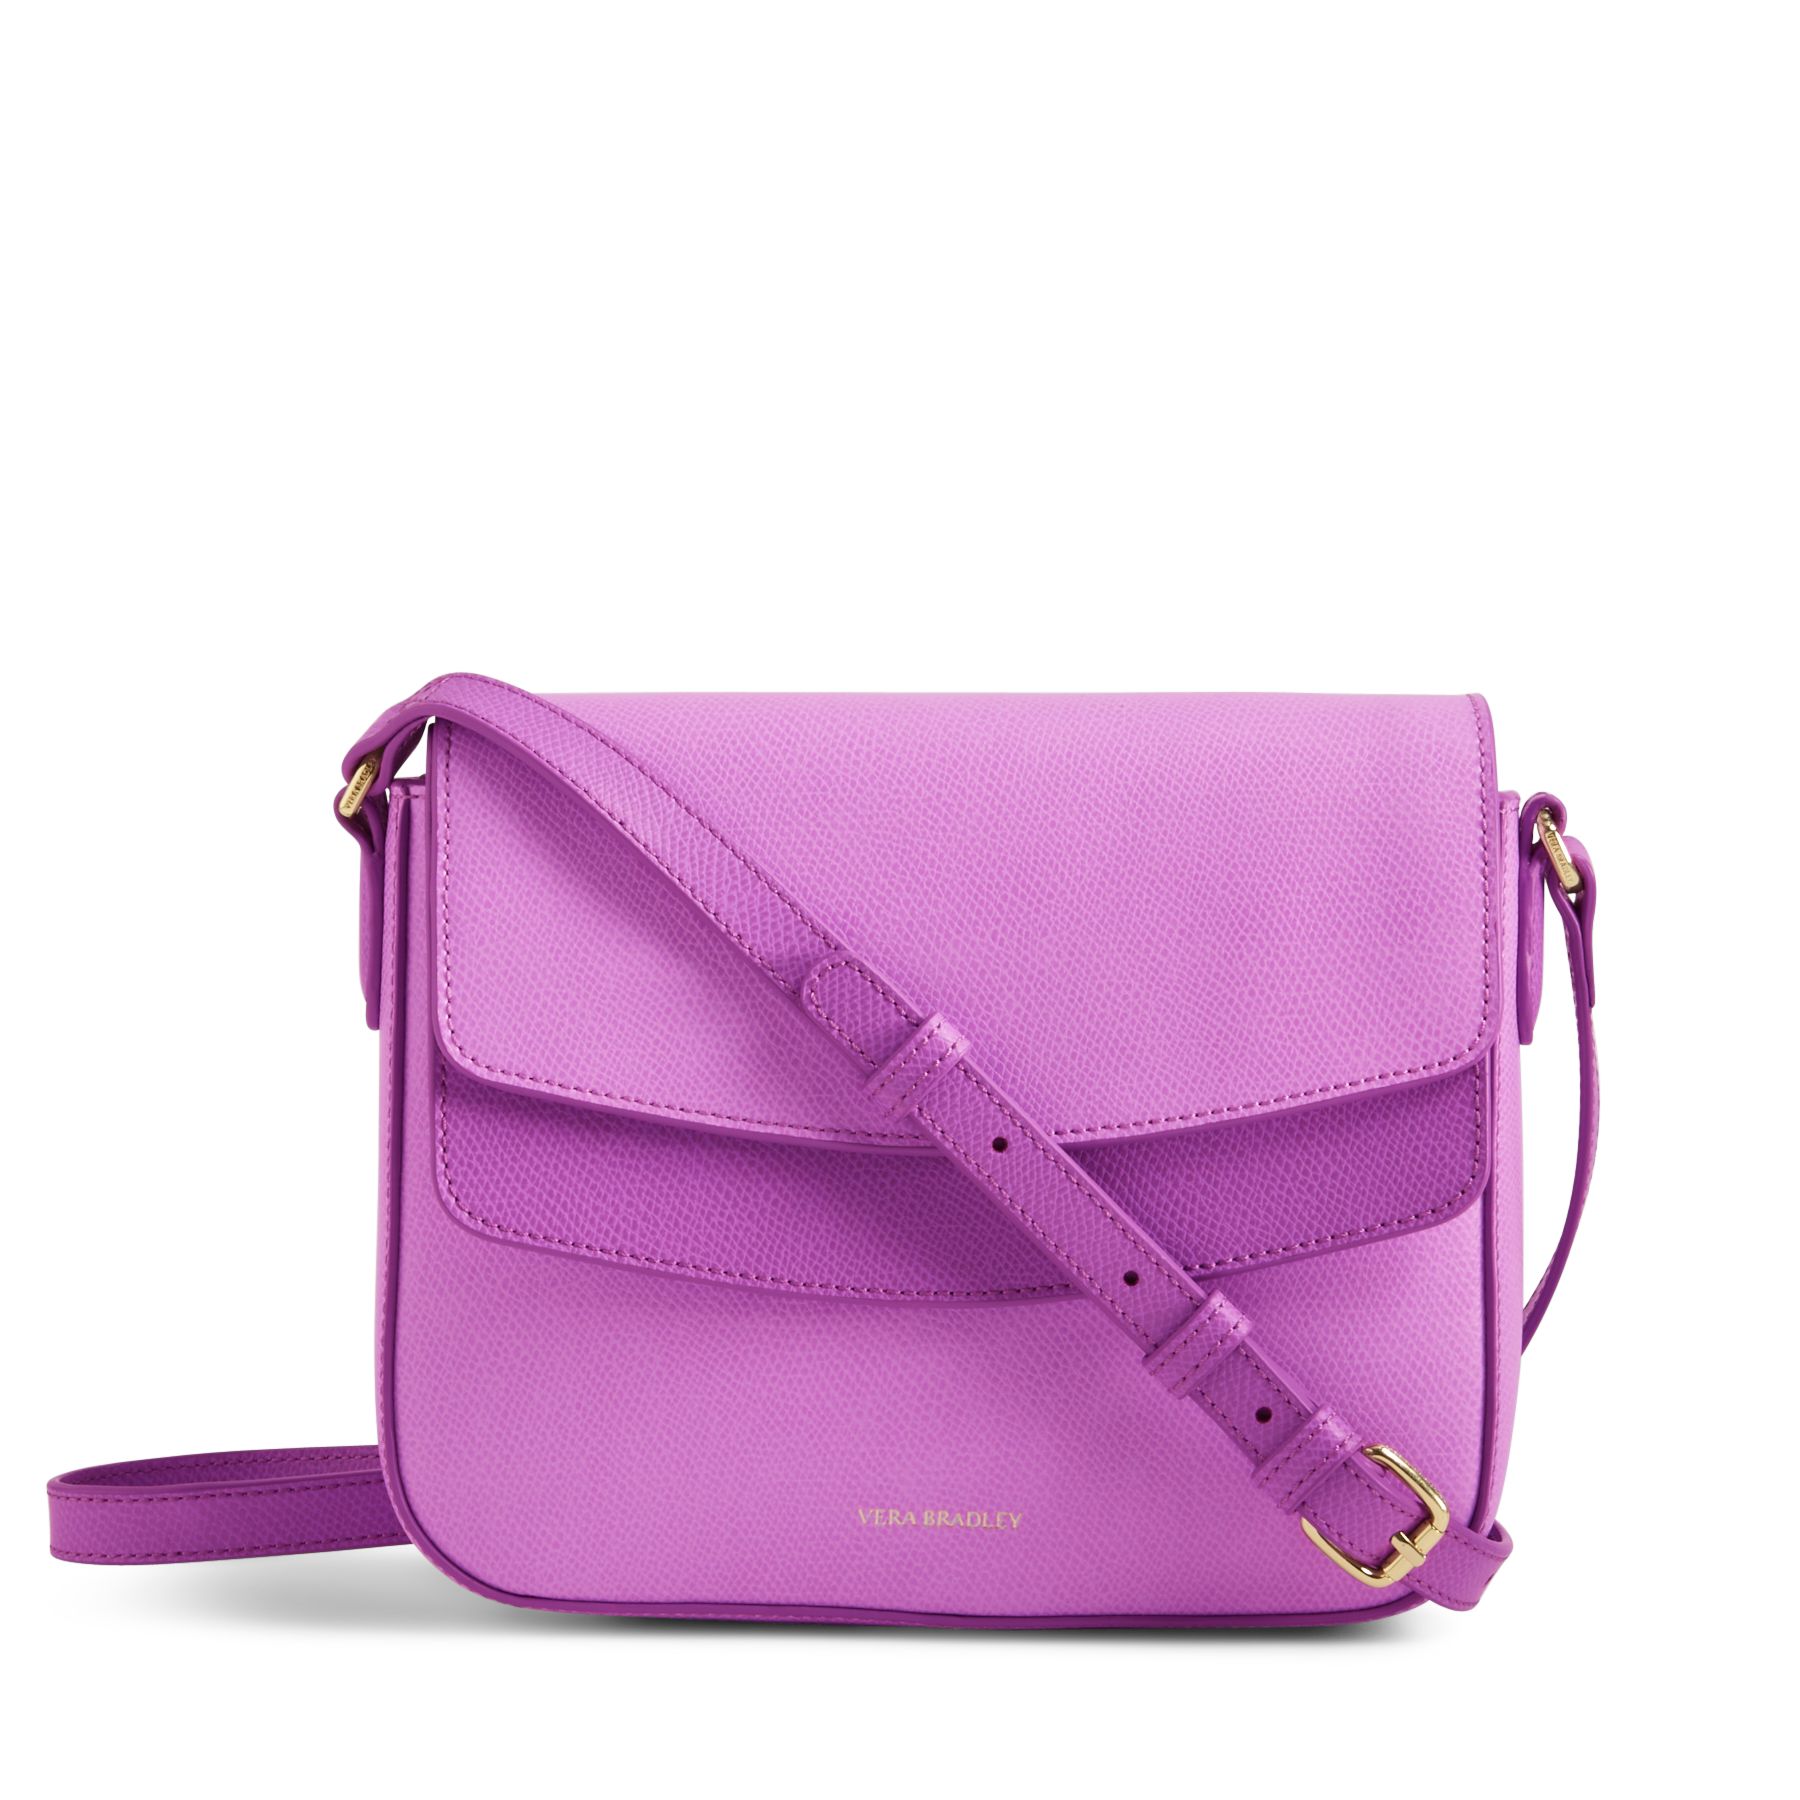 Vera Bradley Leather Twice as Nice Crossbody Bag | eBay